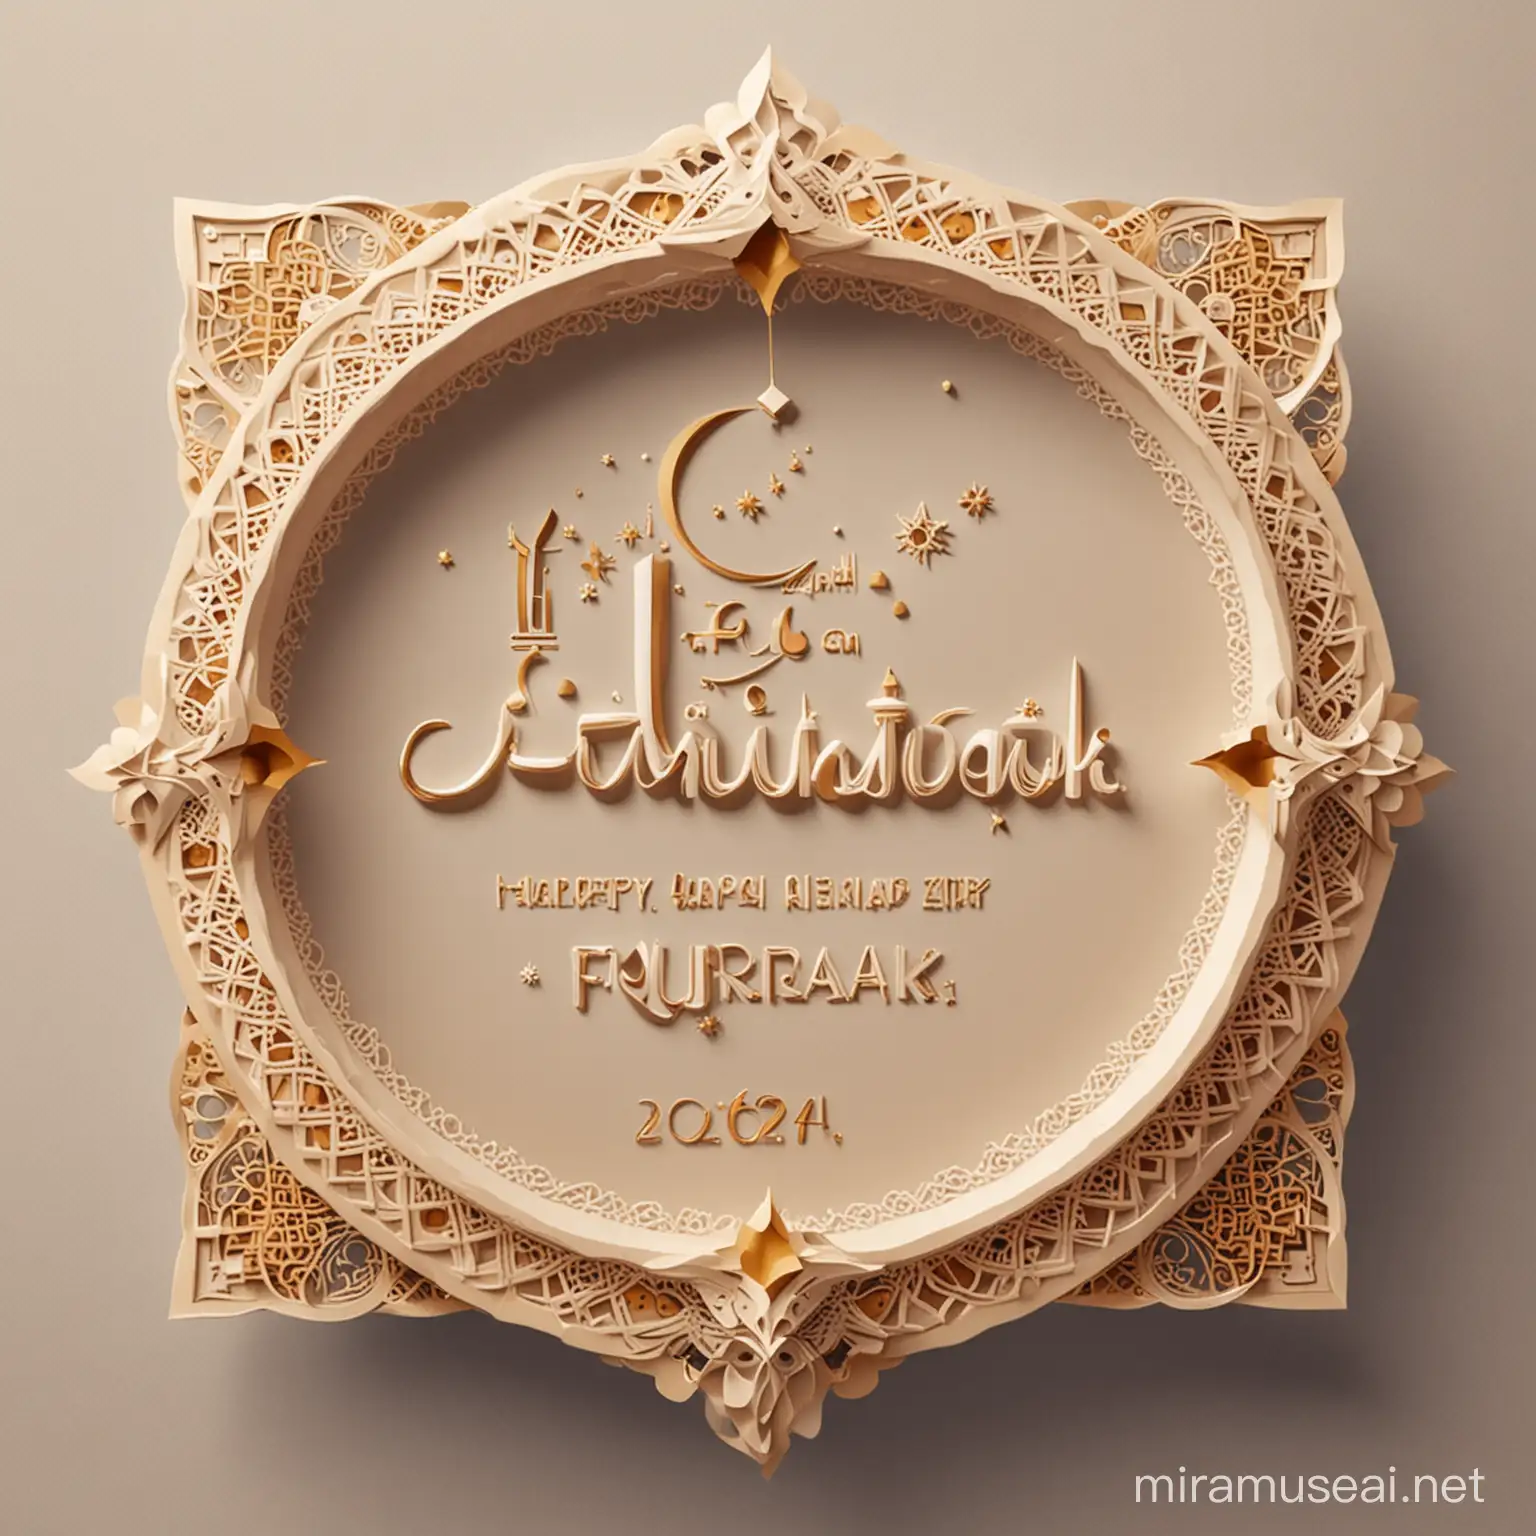 Eid Mubarak 2024
Beautiful card modern aesthetic 